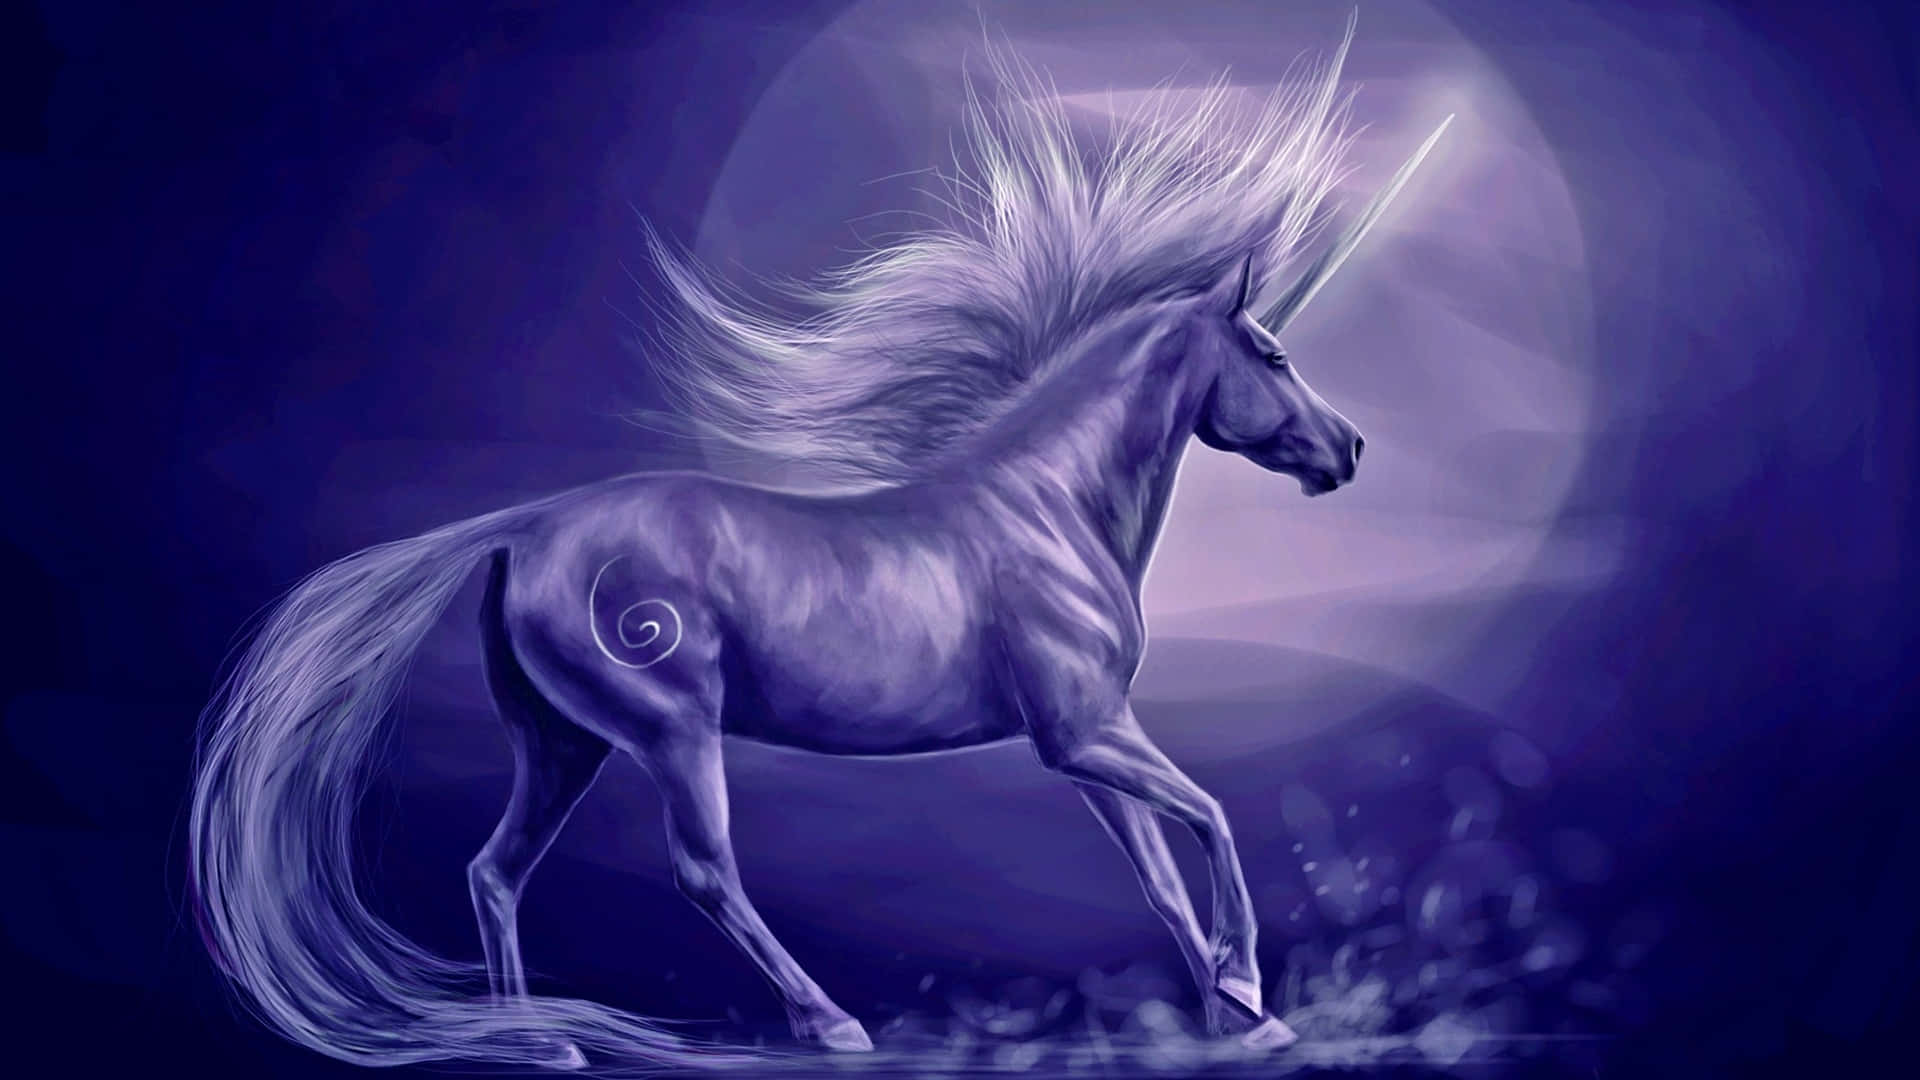 Mystical 3D Unicorn in Dreamy Landscape Wallpaper